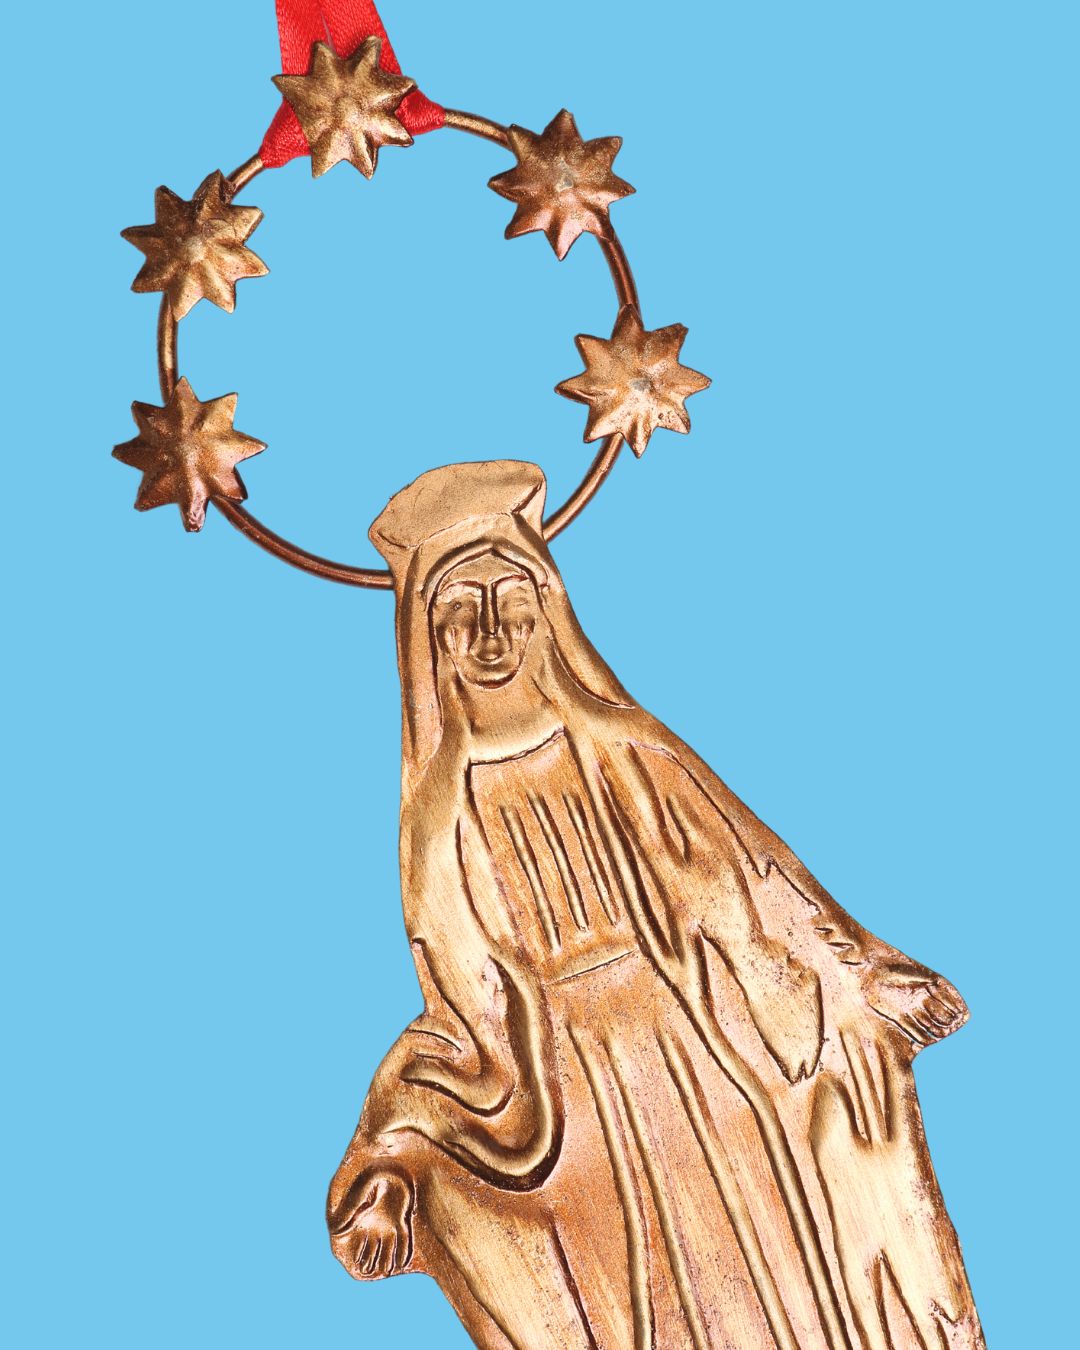 Virgin Mary Ex Voto Decoration